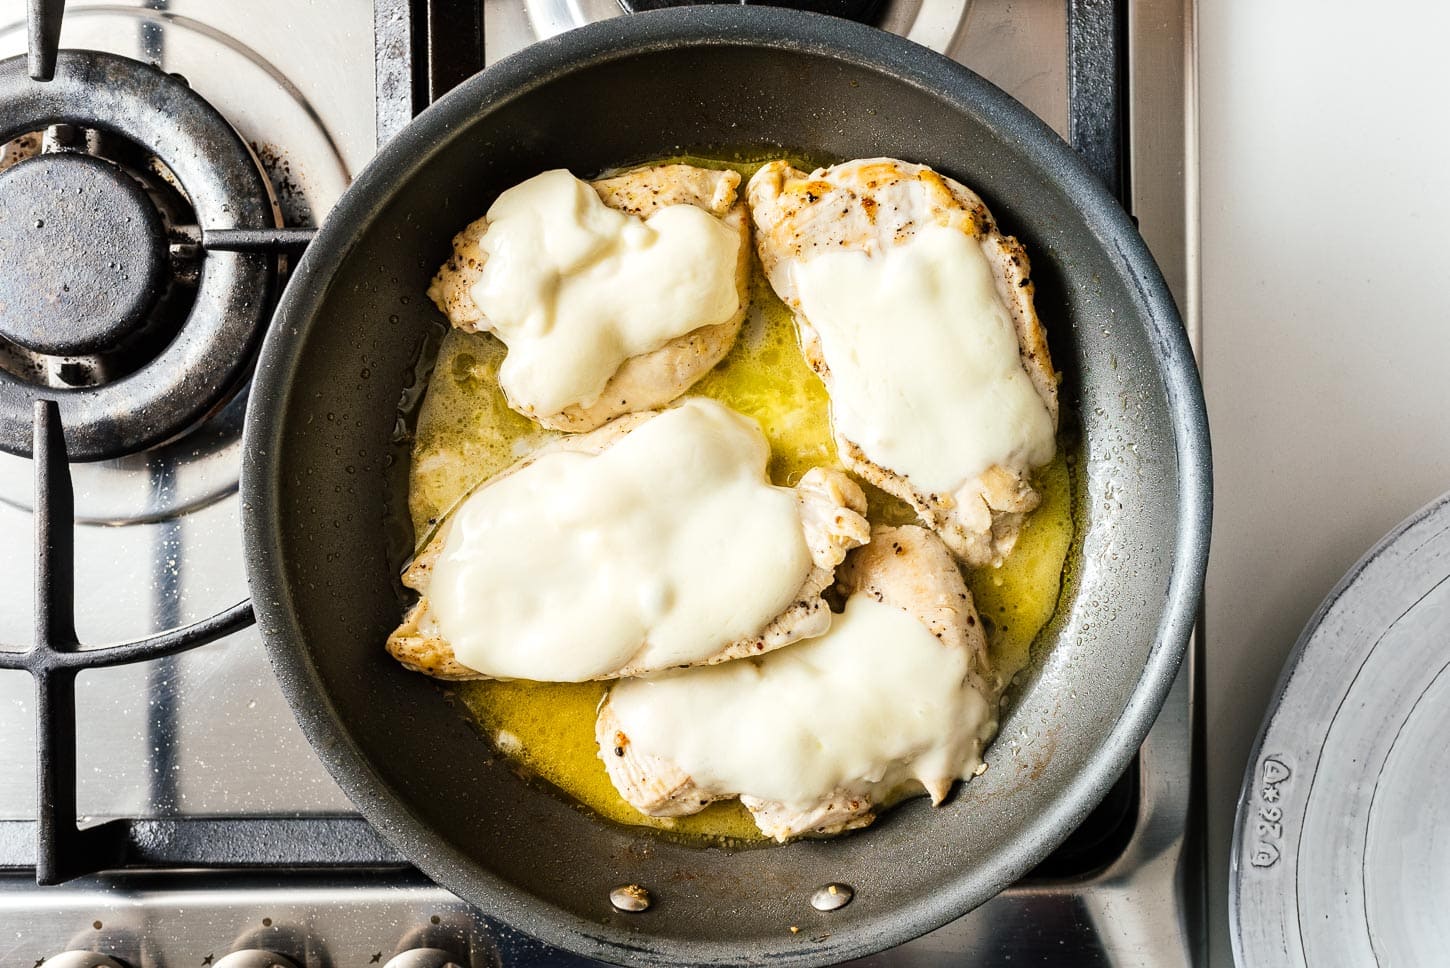 melting cheese on chicken | sharefavoritefood.com